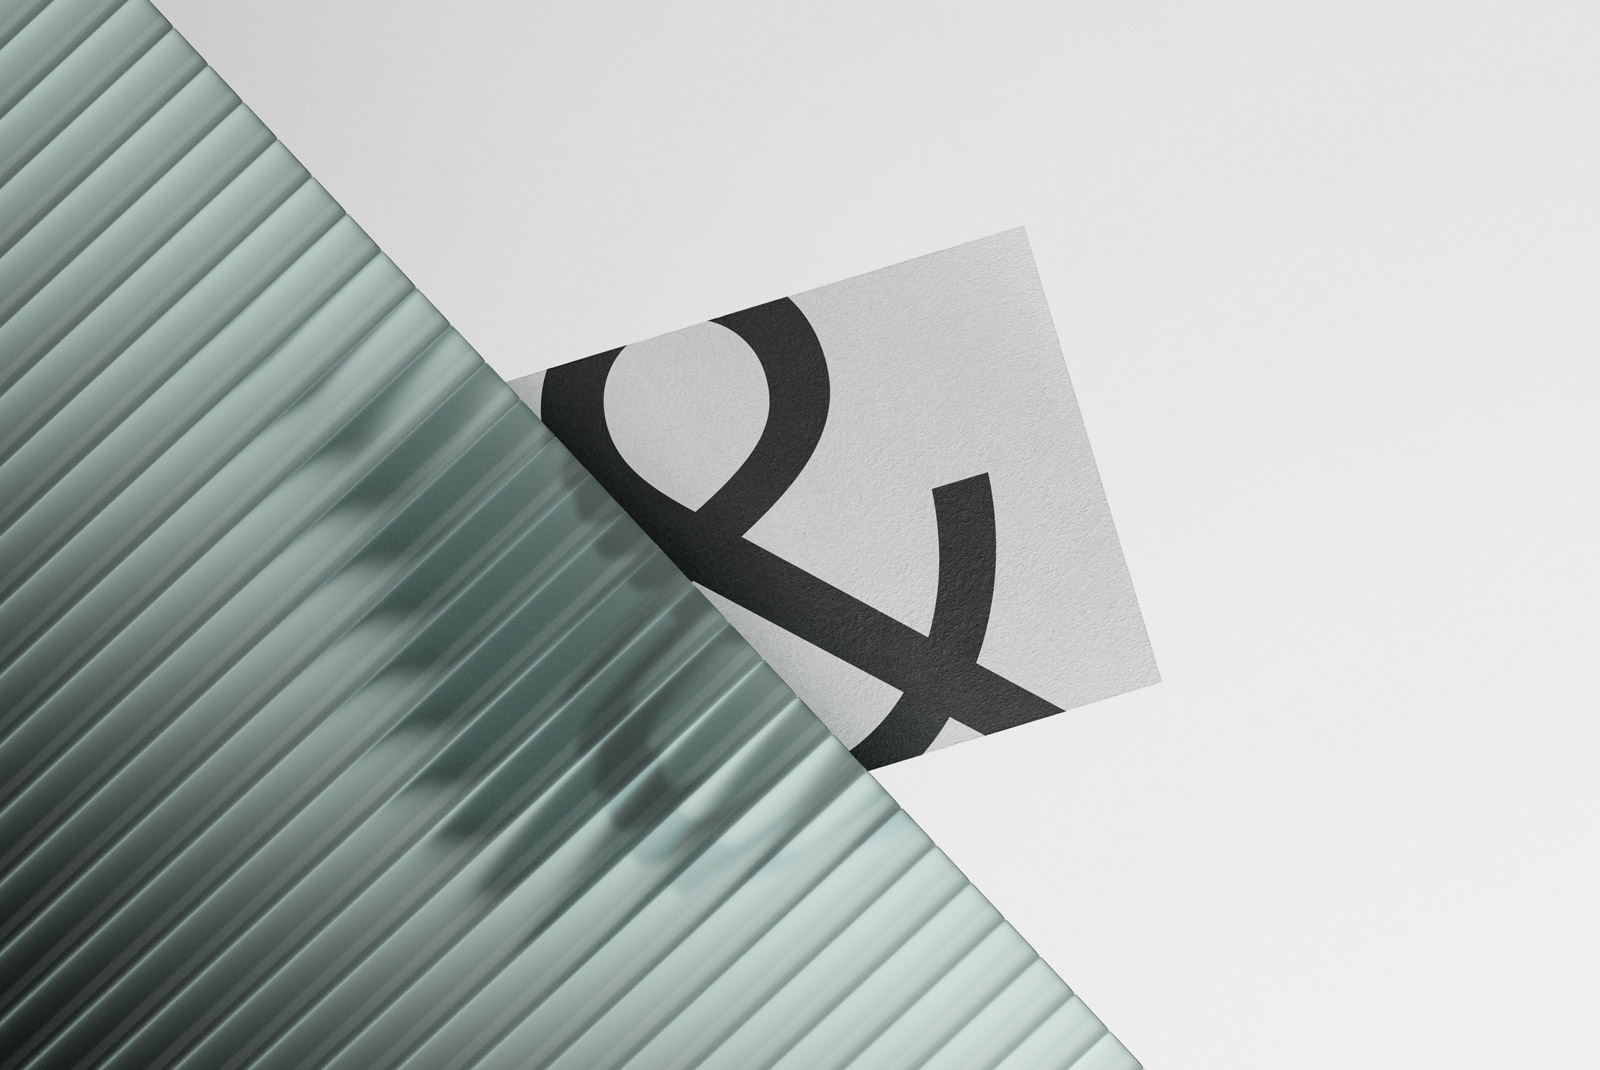 Elegant font letter mockup on paper against a ribbed glass background, showcasing typography design and print presentation.